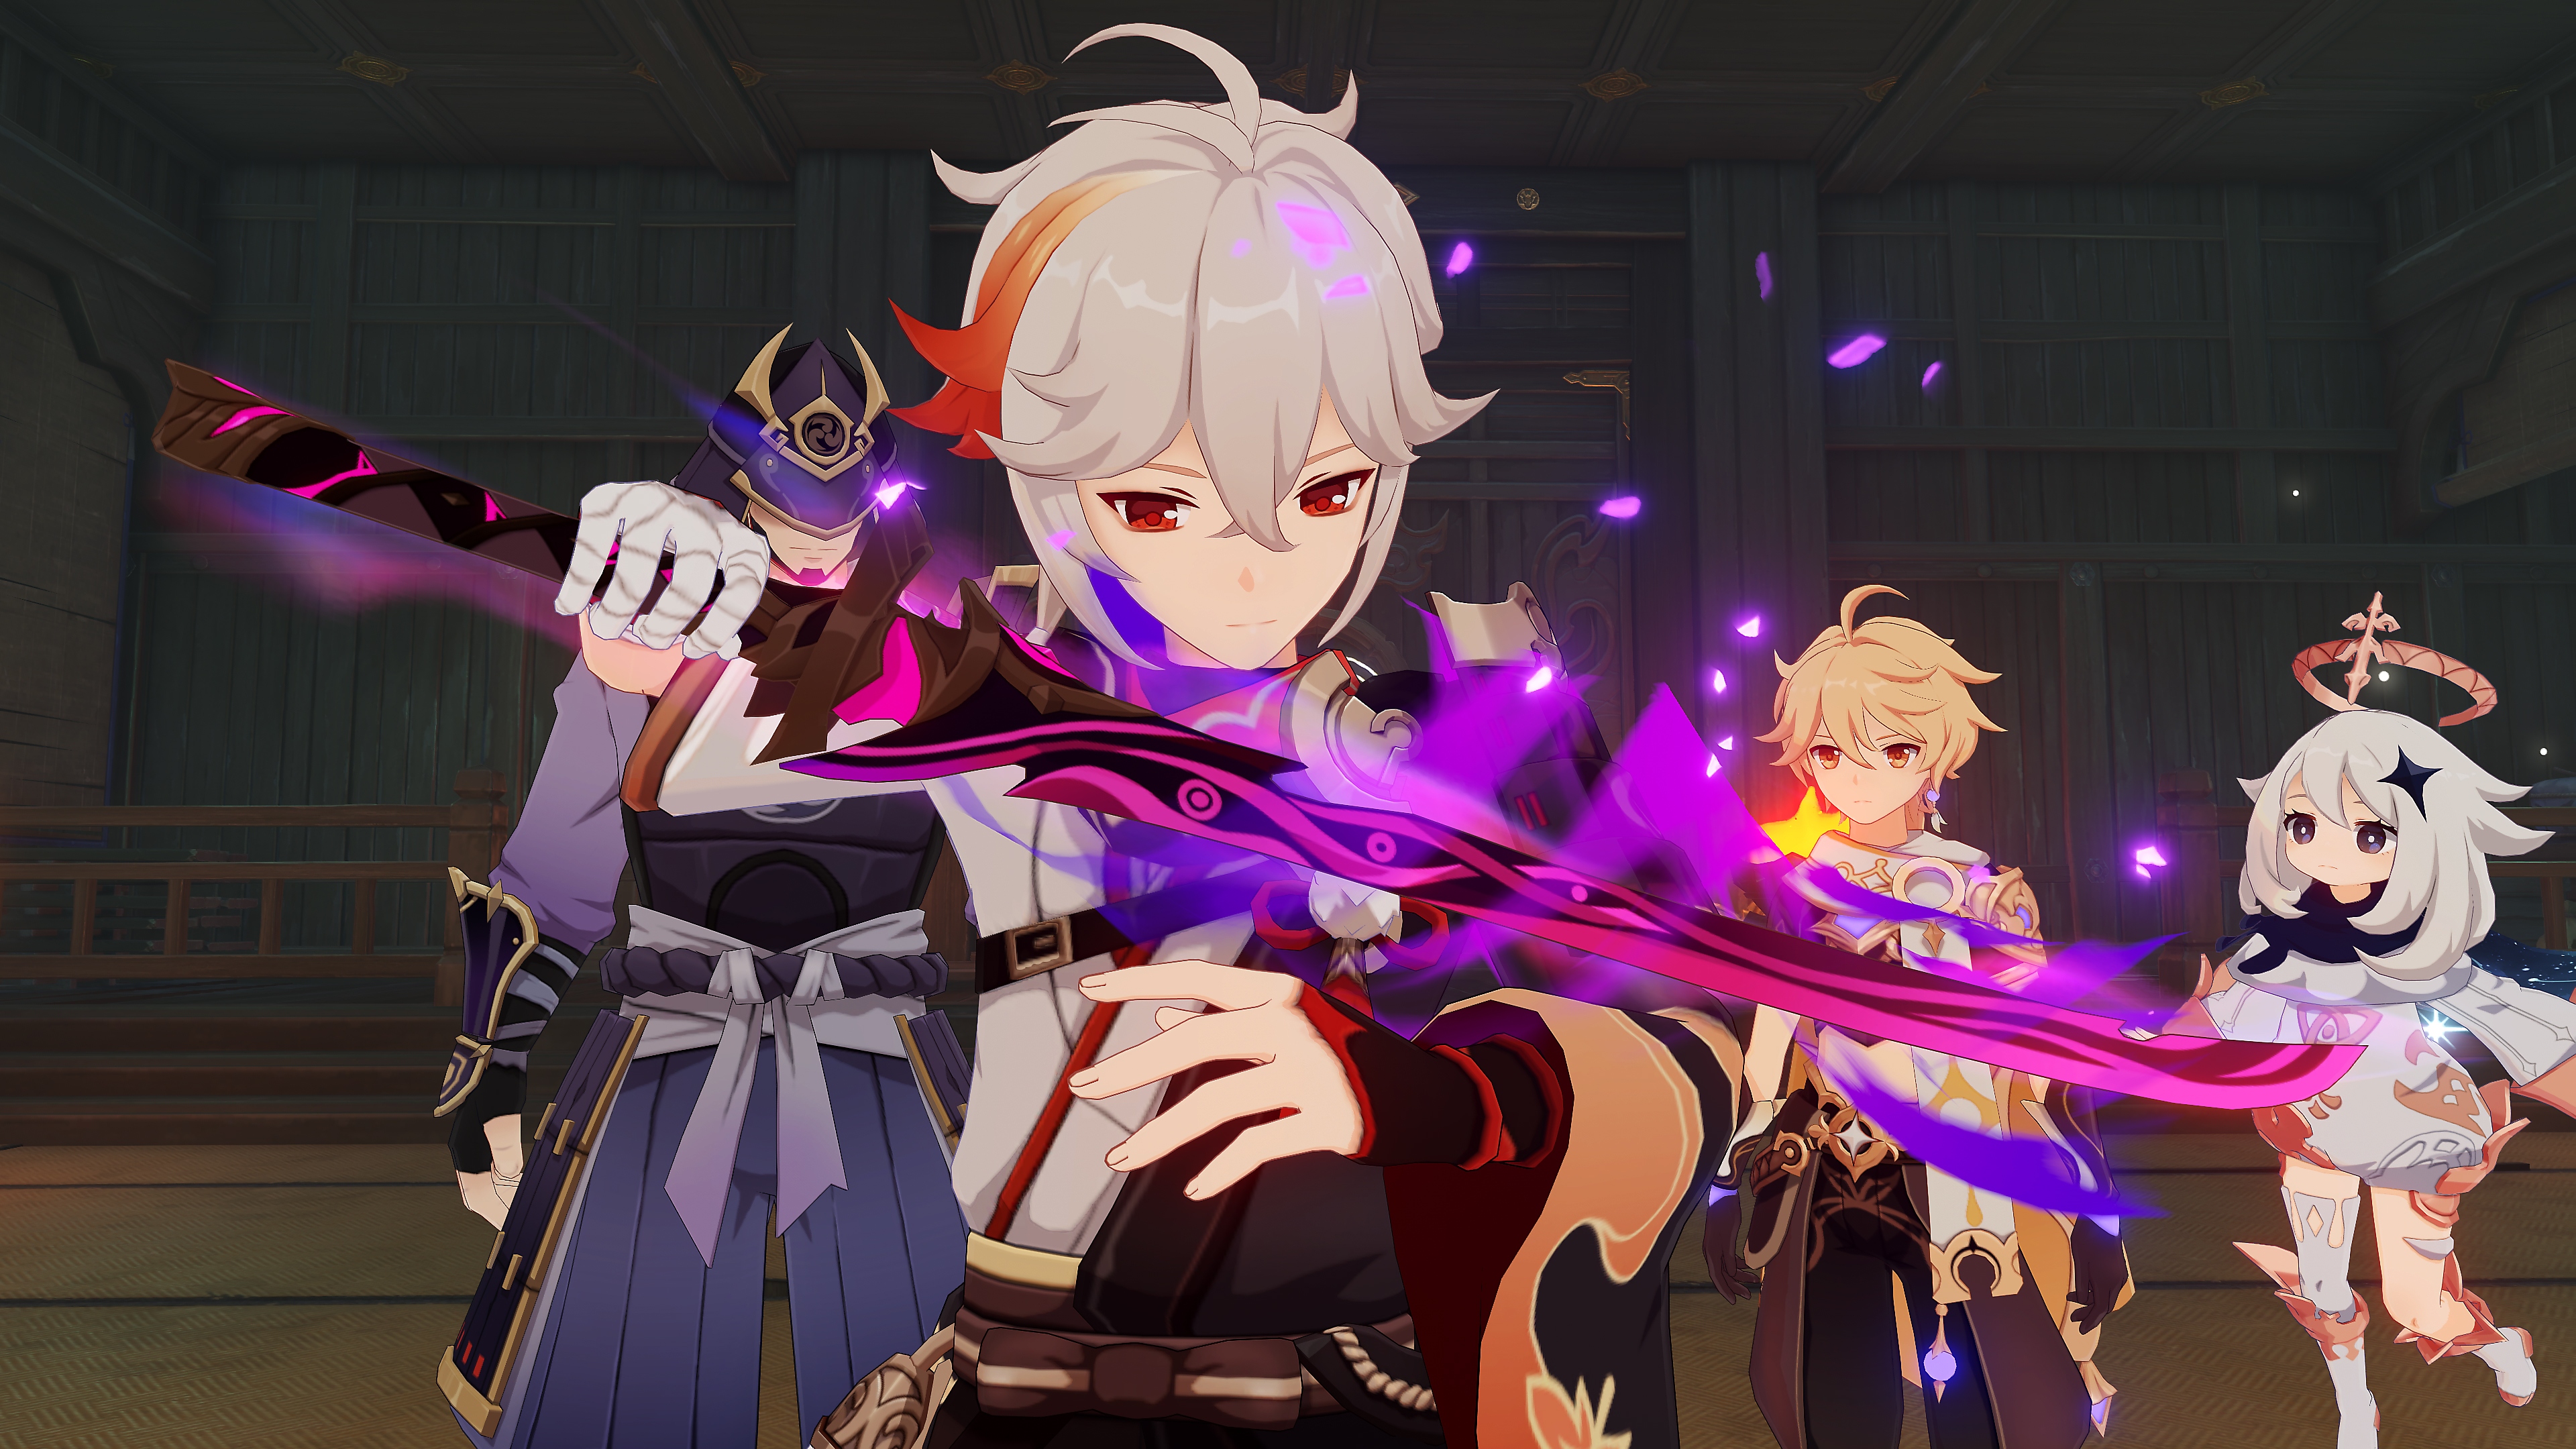 Genshin Impact: 2.8 Update screenshot showing a character with a glowing purple sword